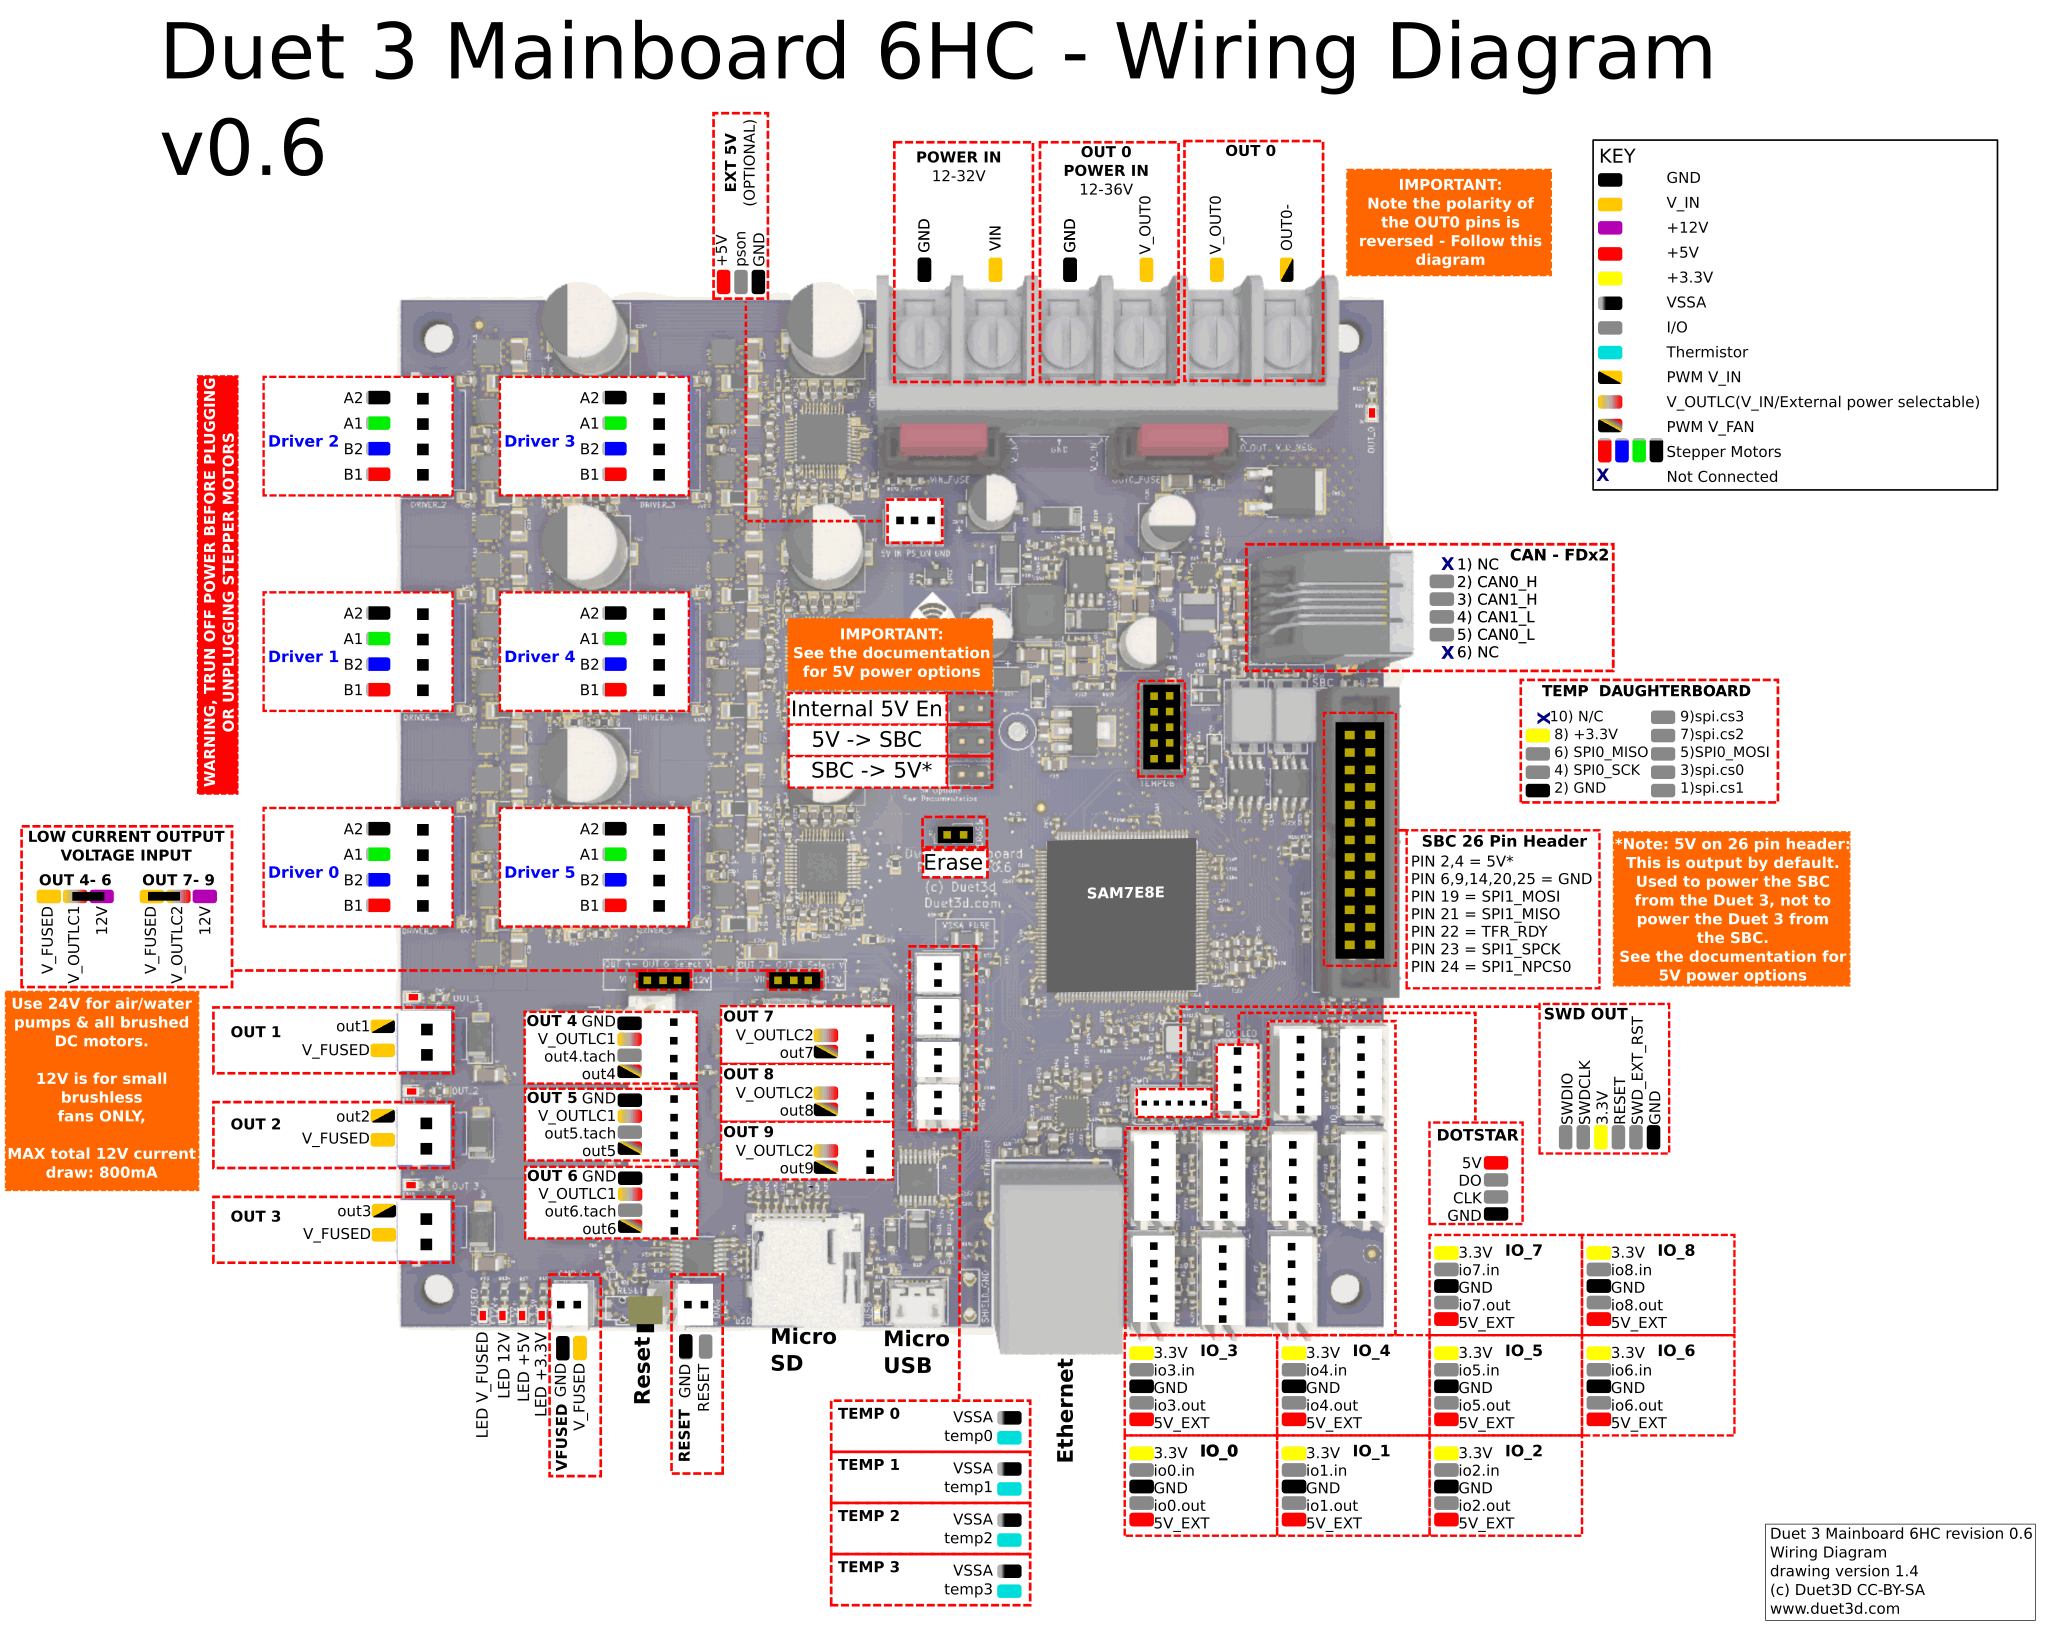 duet_3_mb6hc_wiring_diagram_v0.6.png